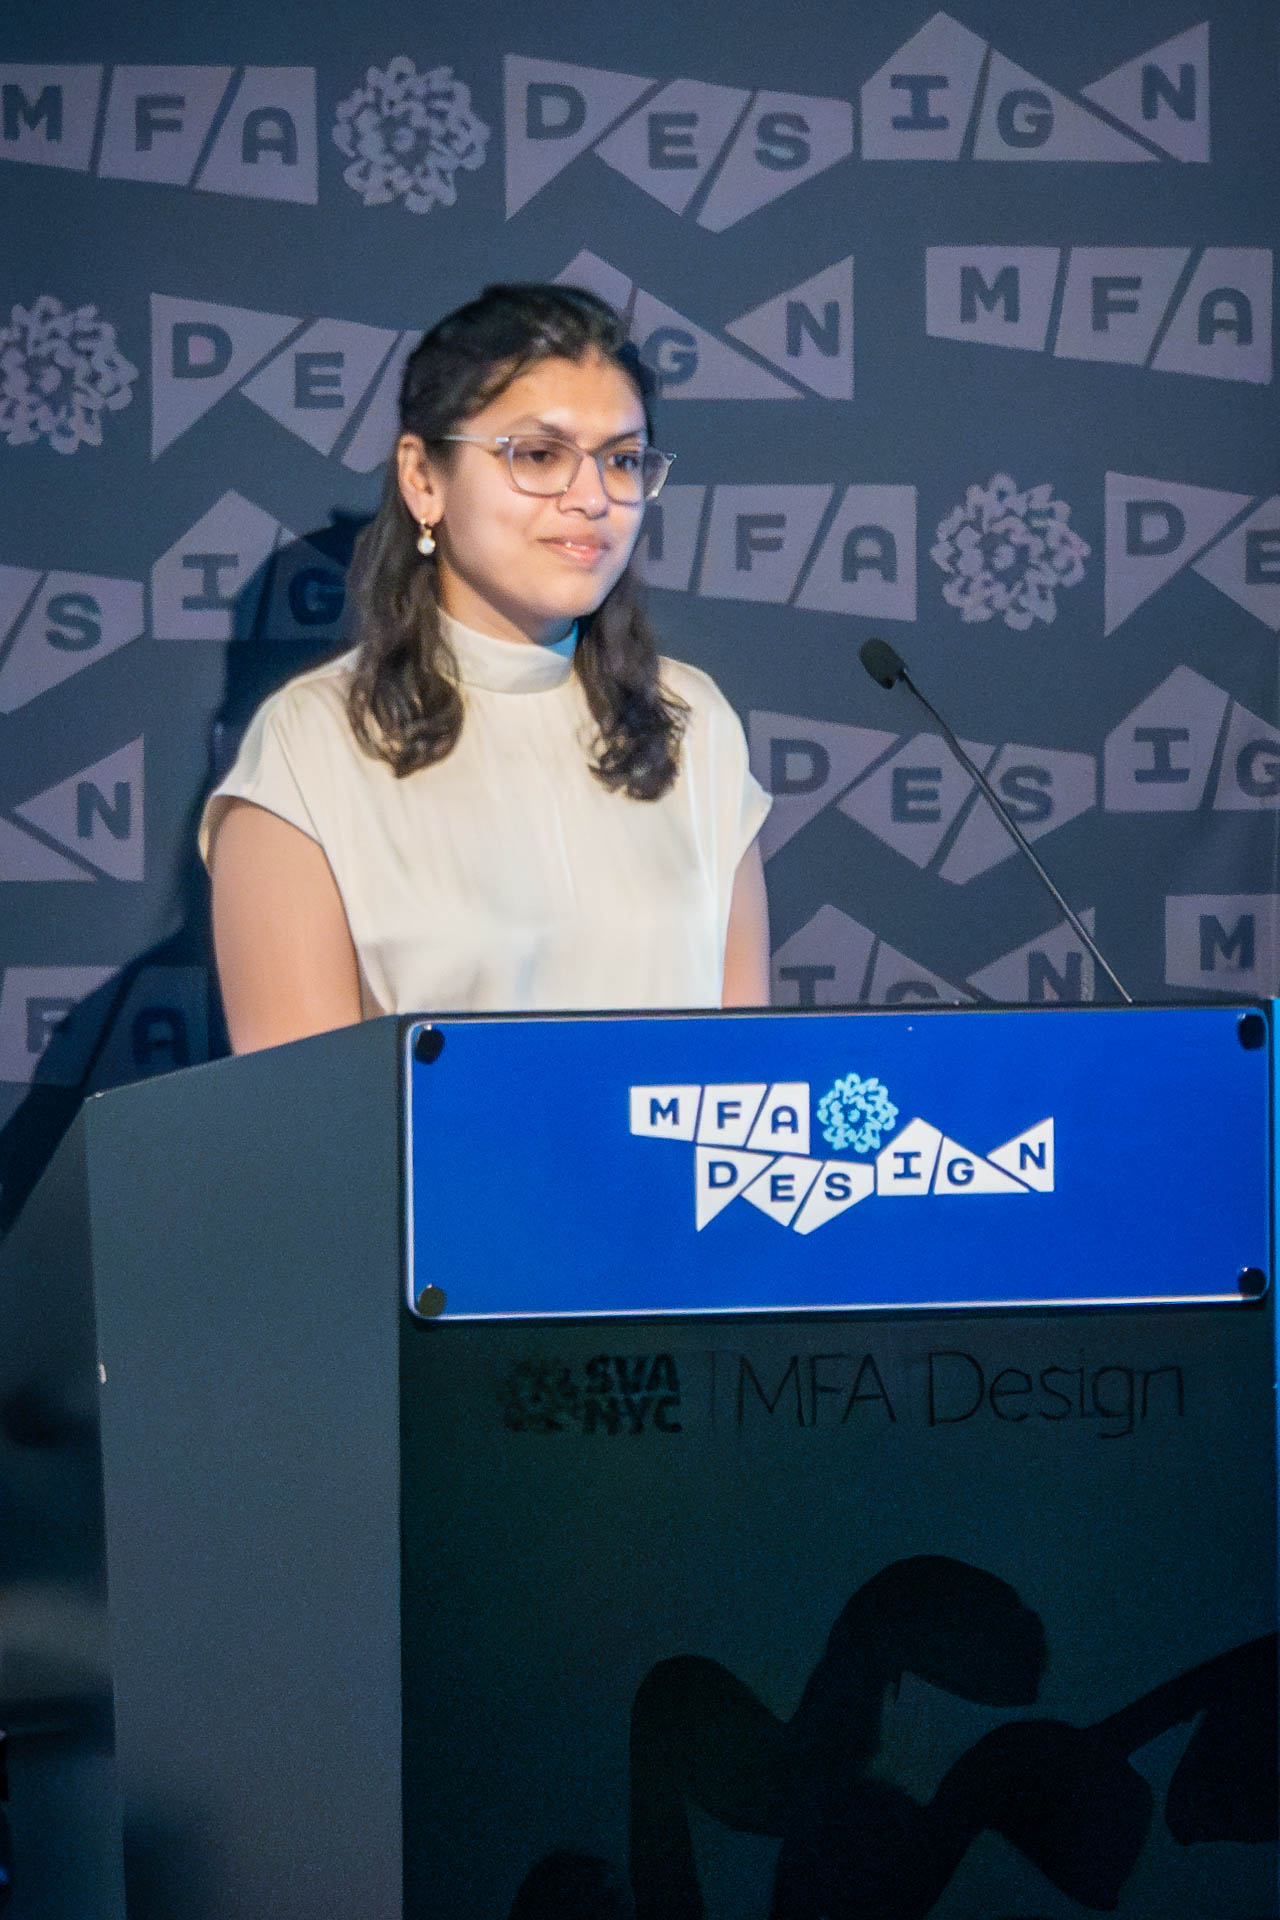 student at a podium giving a presentation